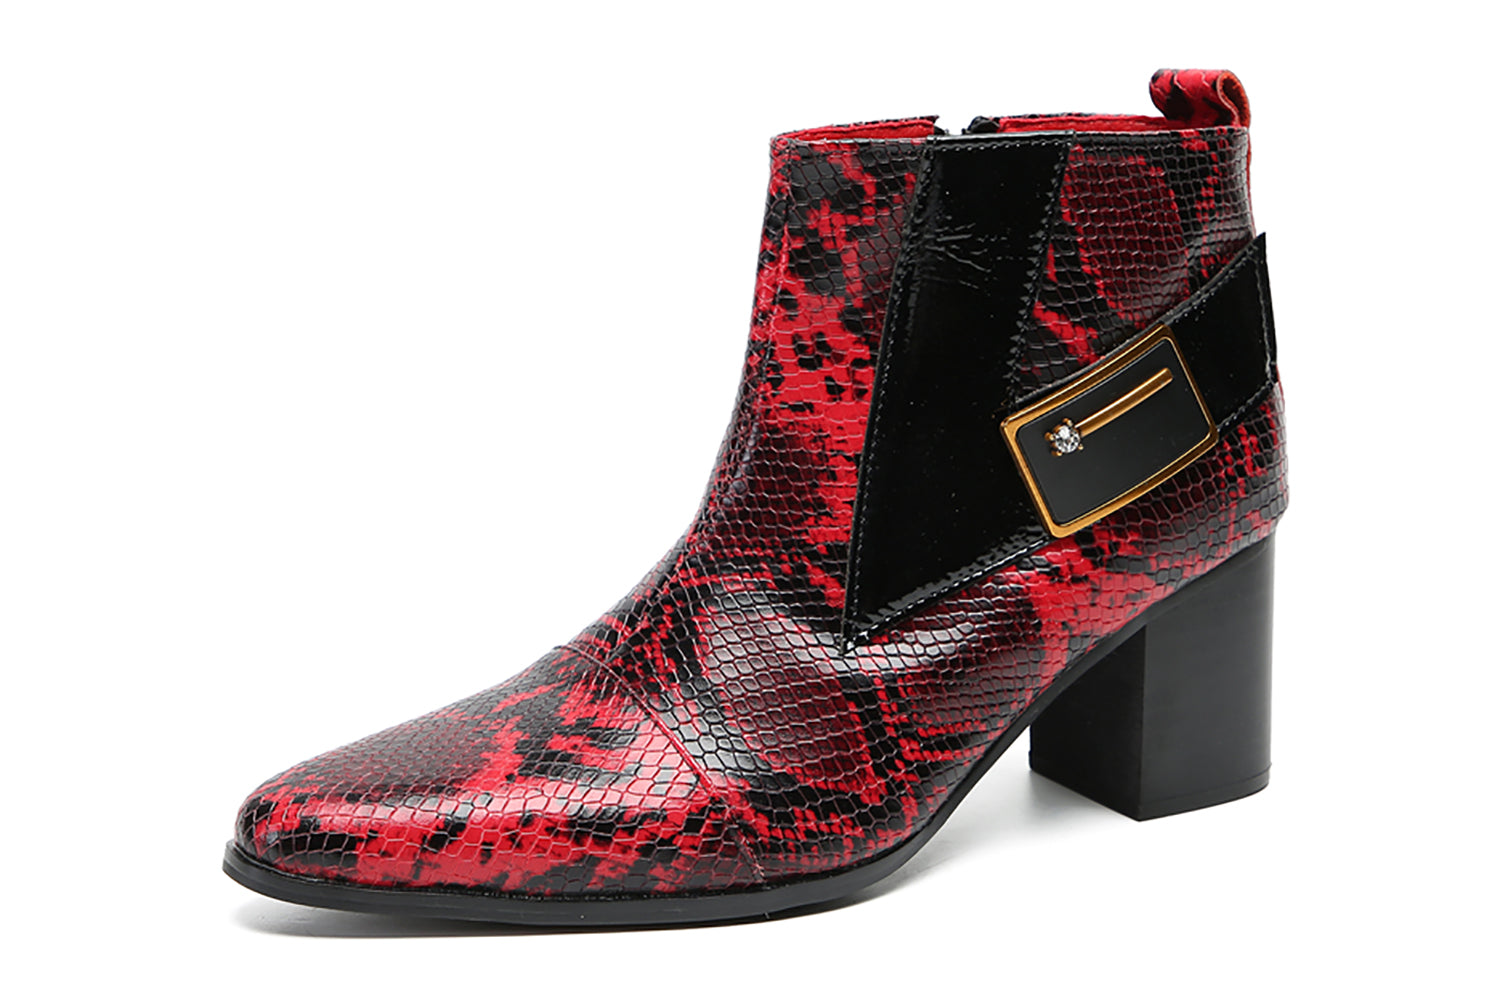 Men's Hight Top Snakeskin Texture Western Boots